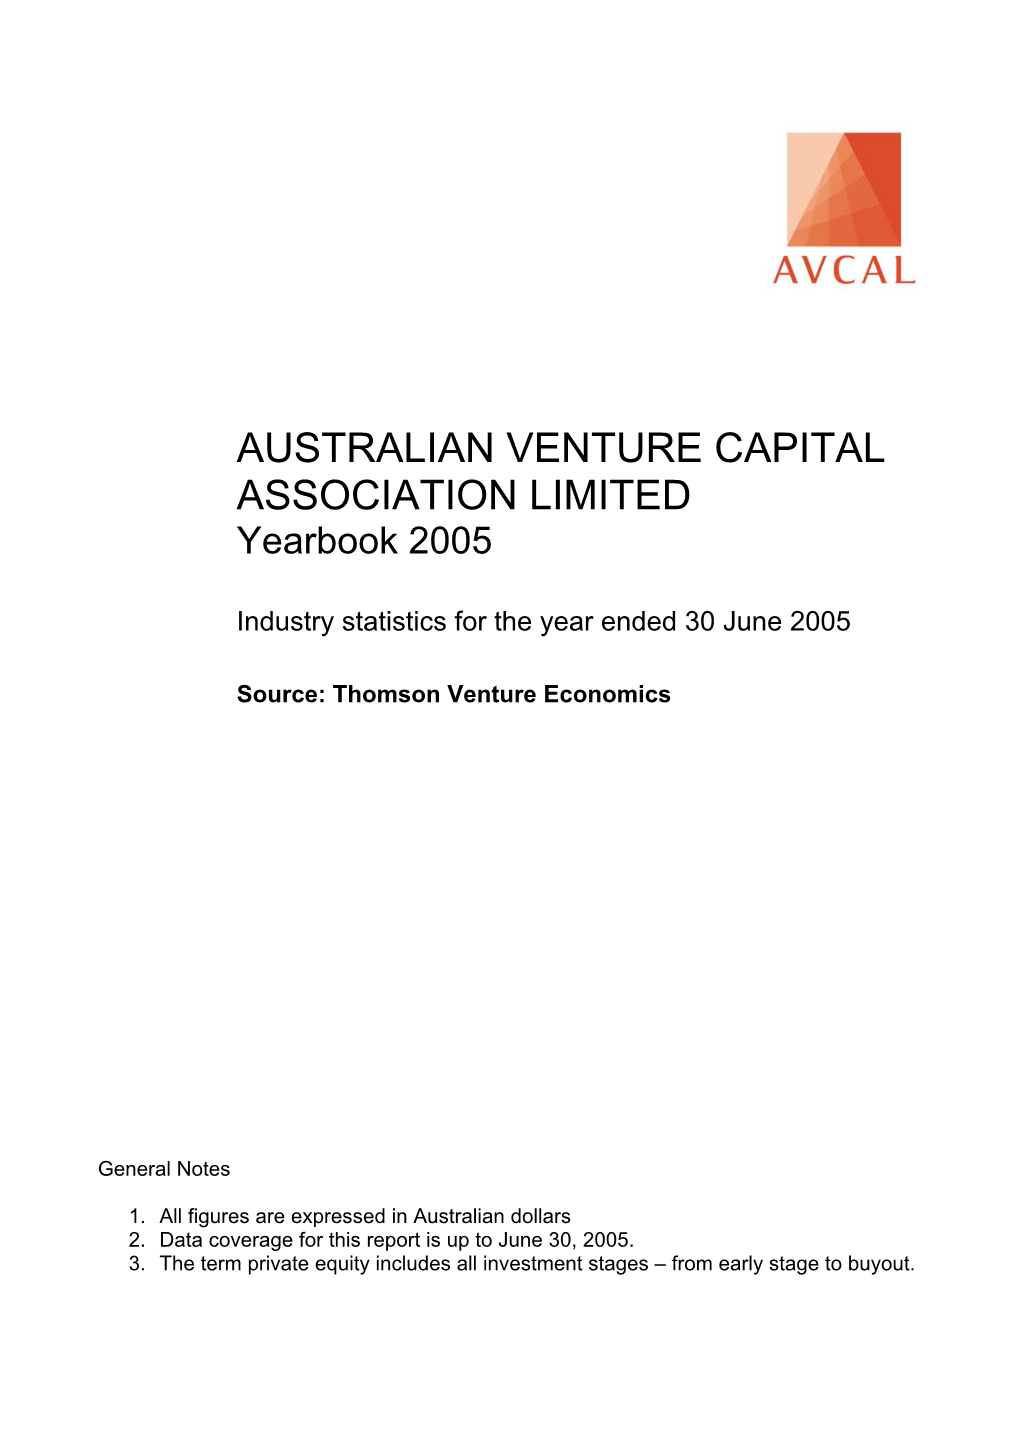 AUSTRALIAN VENTURE CAPITAL ASSOCIATION LIMITED Yearbook 2005